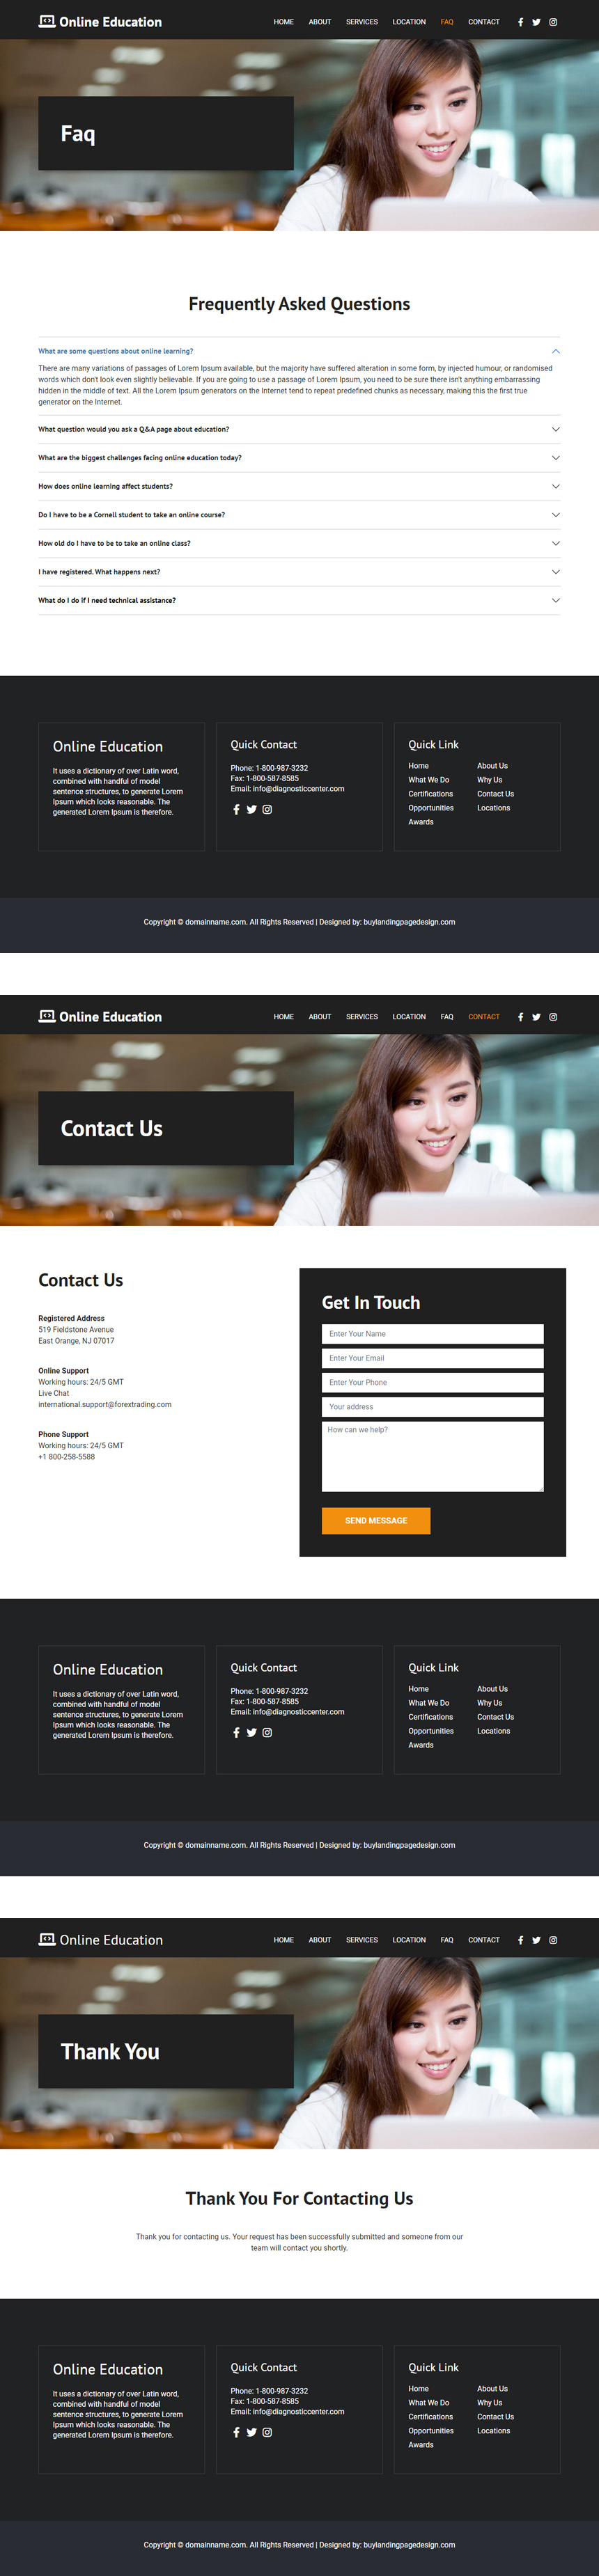 online education service responsive website design